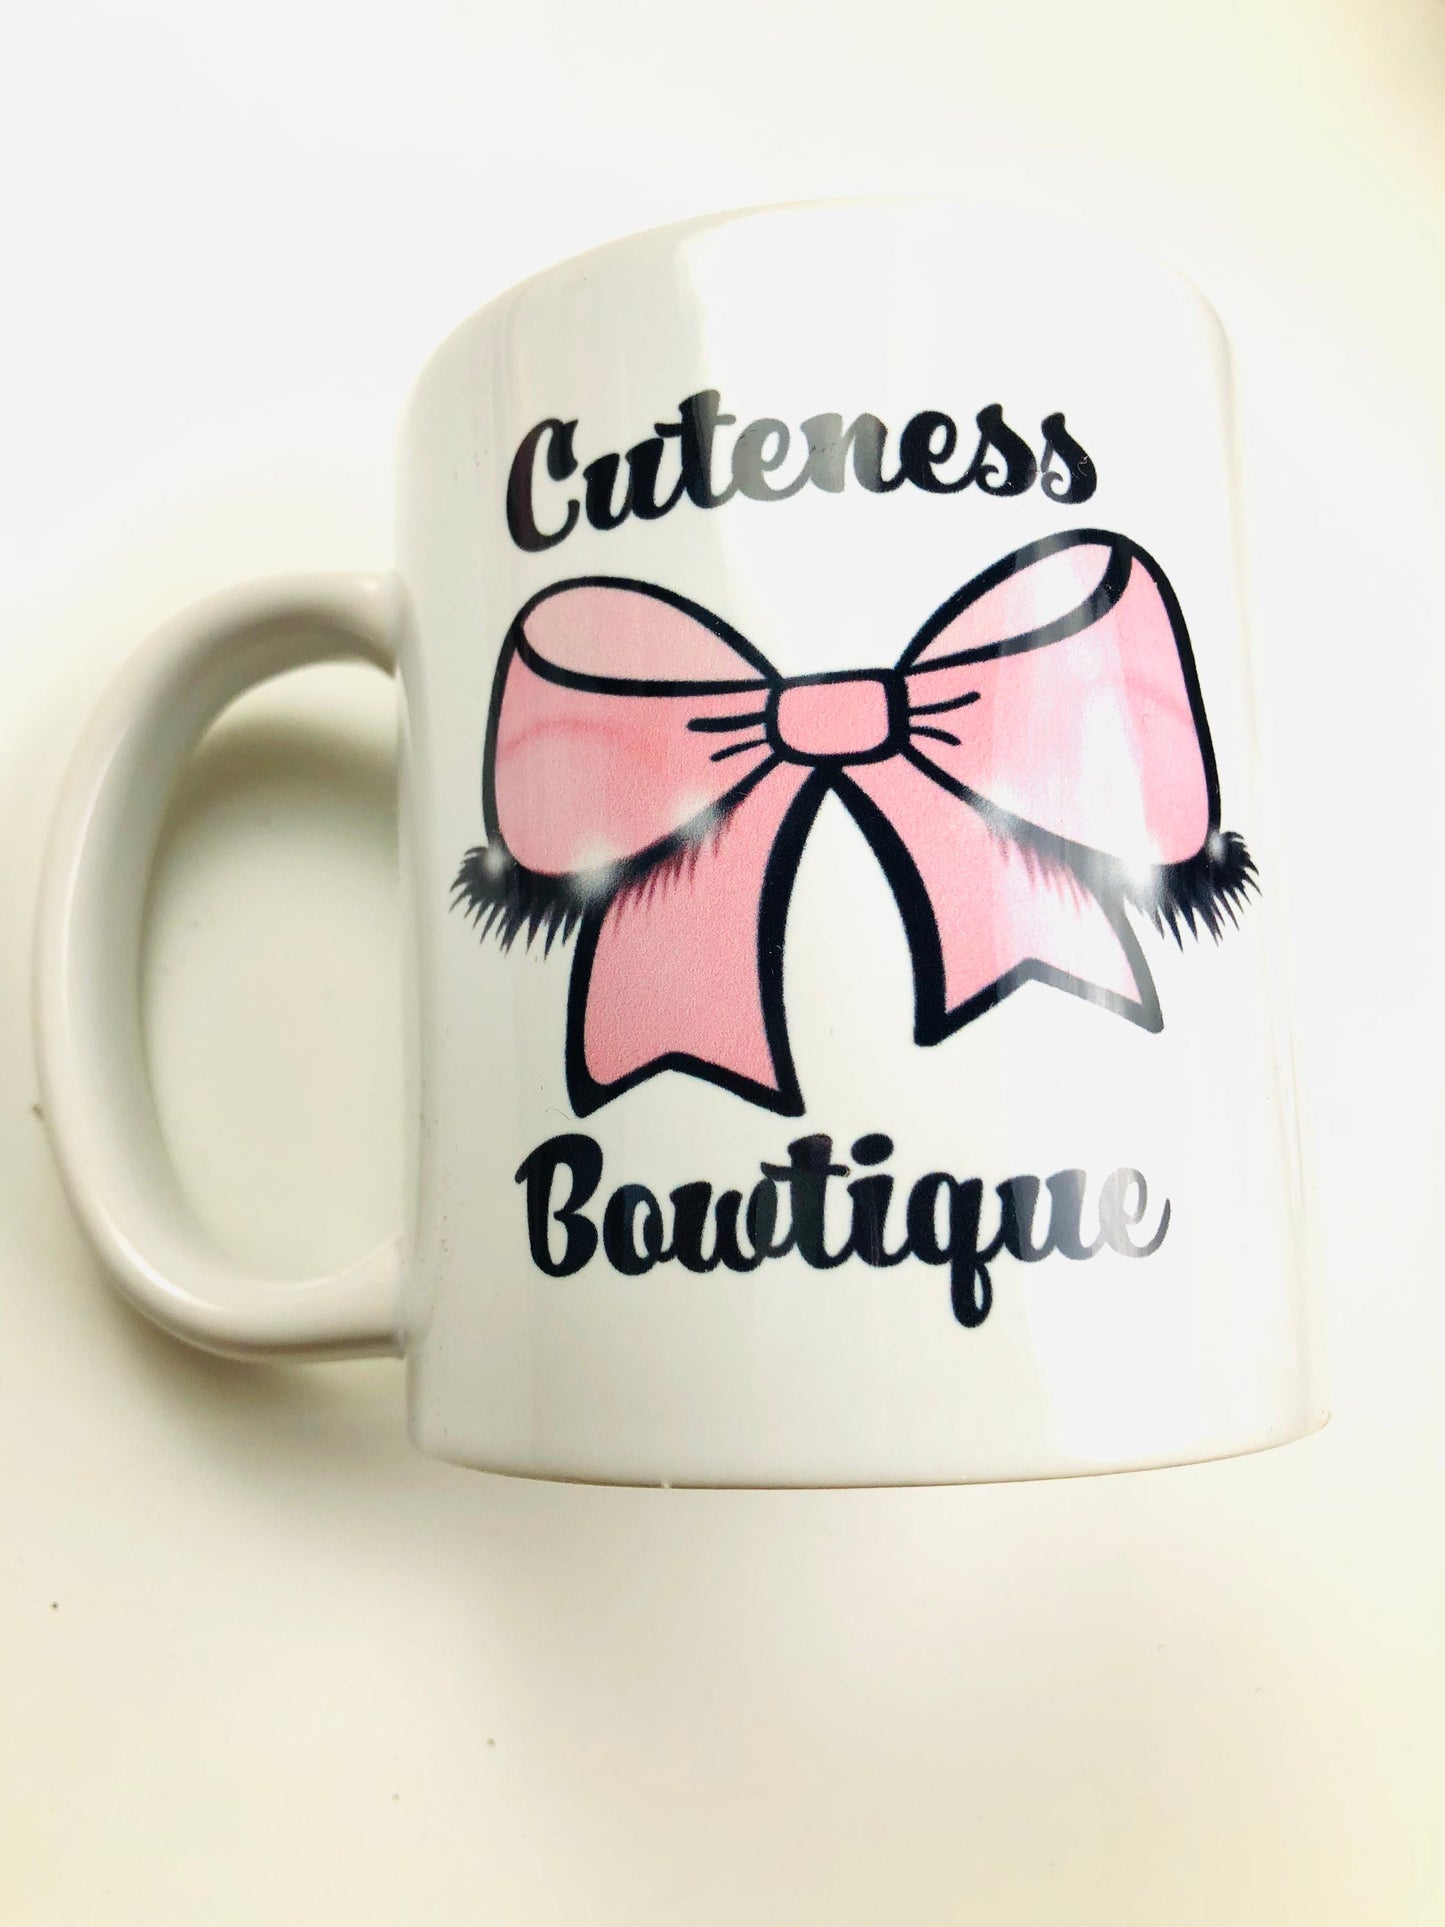 Cuteness Bowtique Mug